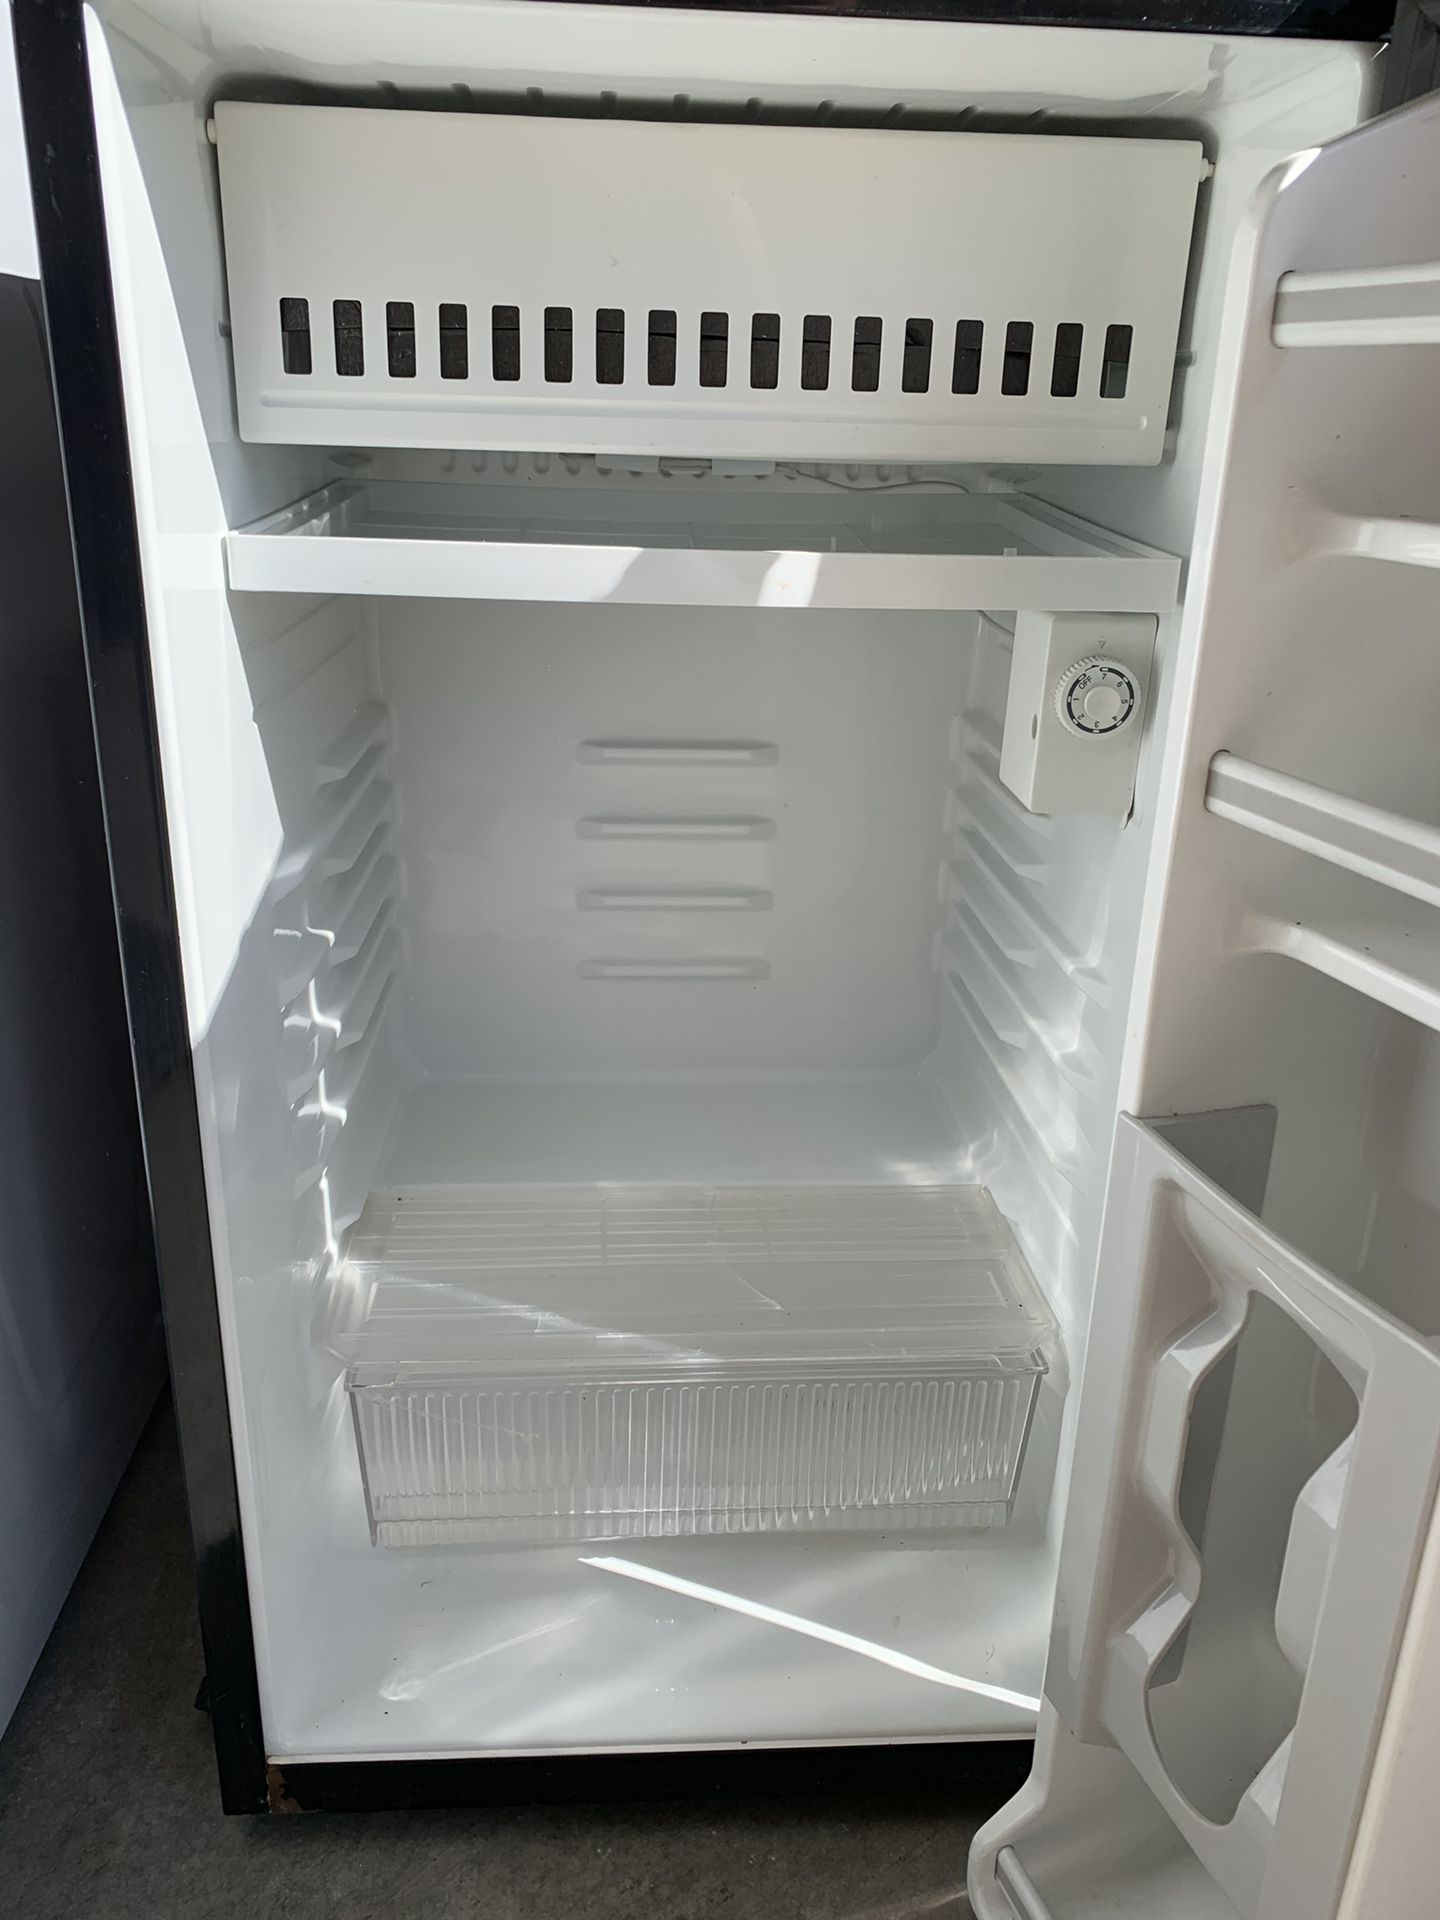 Black Magic Chef compact refrigerator